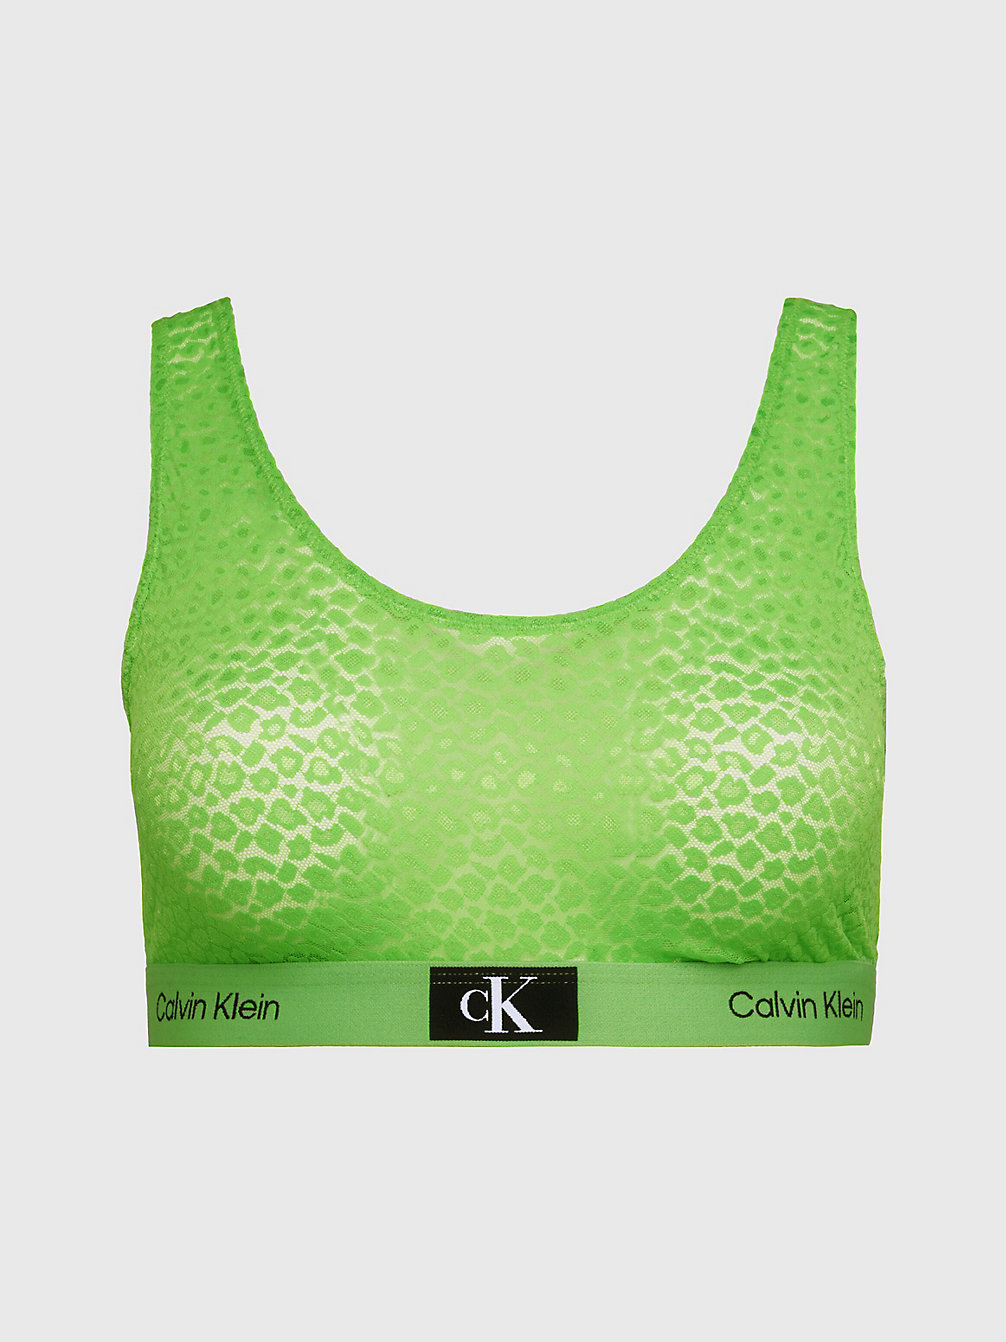 FABULOUS GREEN Bralette In Großen Größen - Ck96 undefined Damen Calvin Klein